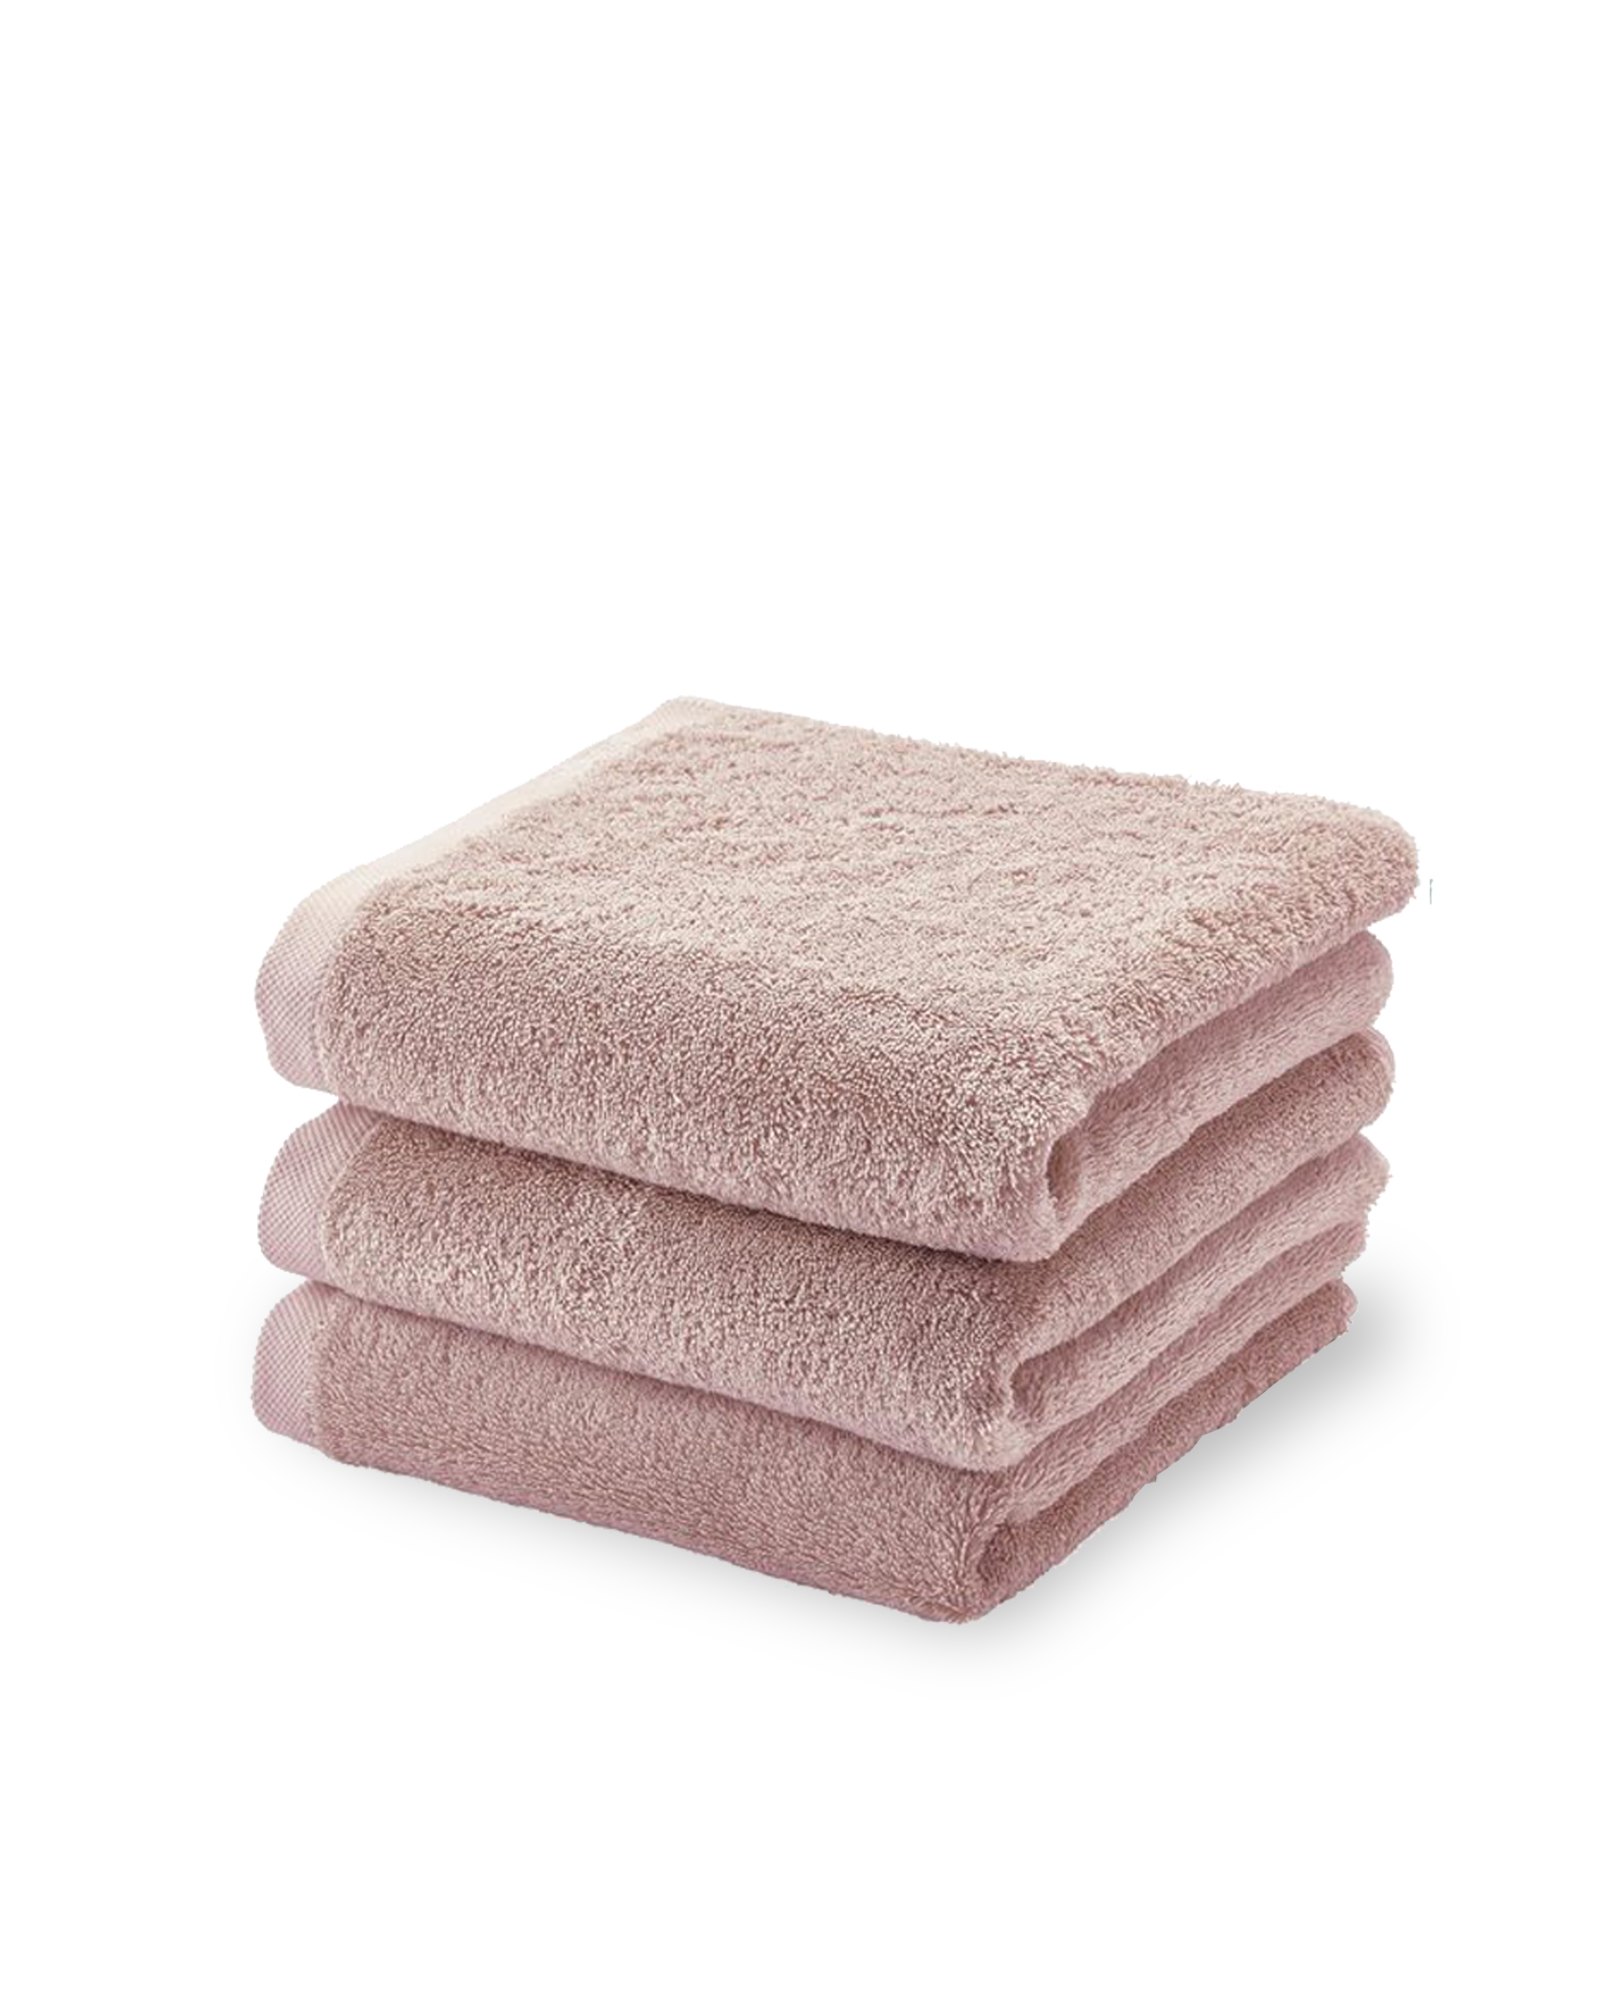 Aquanova - Hand towel LONDON Dusty Pink C.87 - 55x100 cm - Dusty Pink C.87